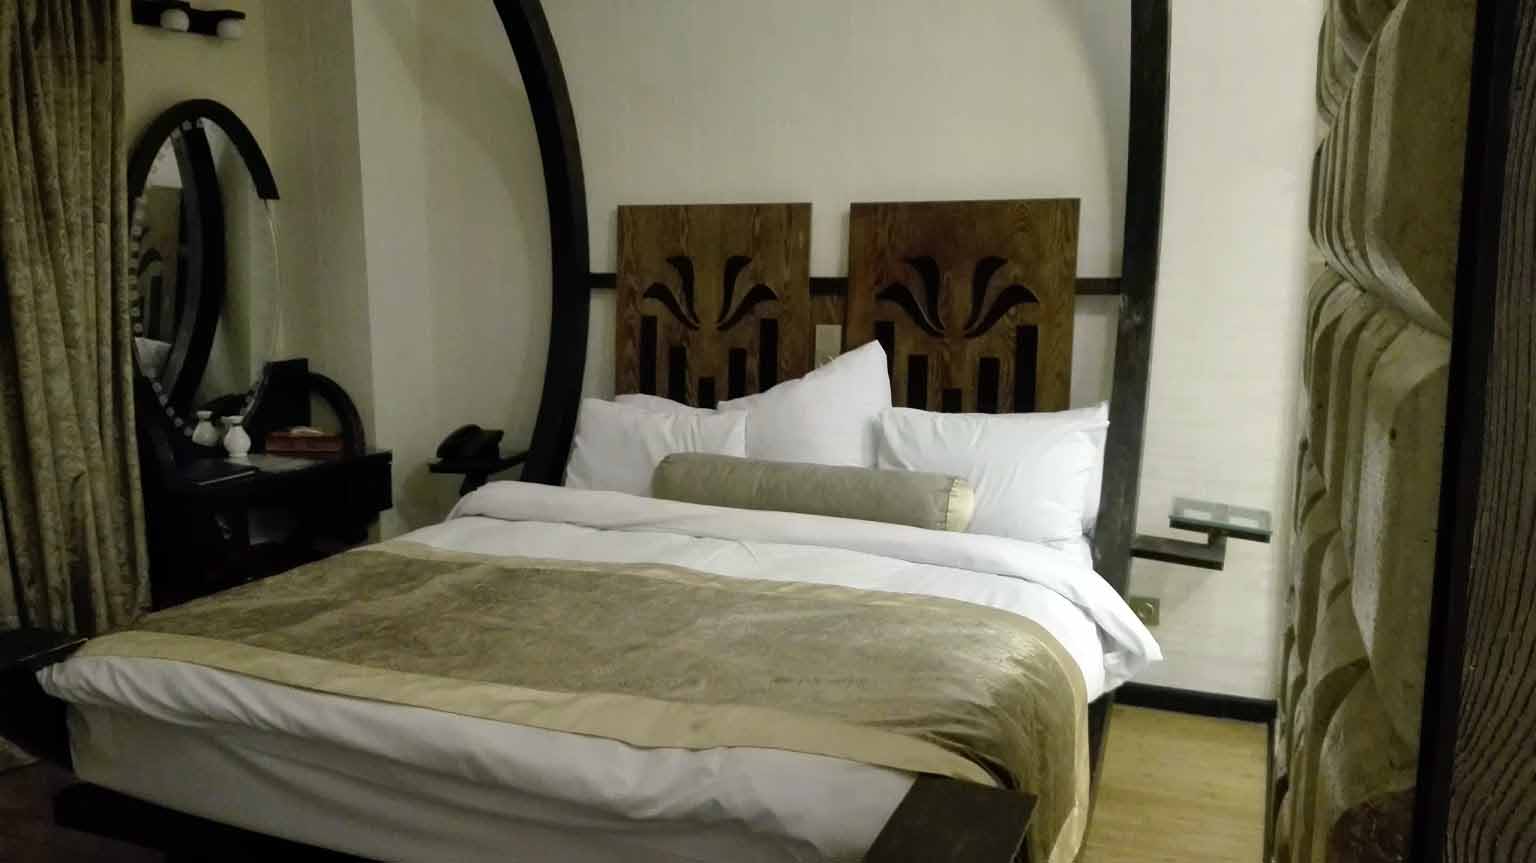 Two Beds Room,Tehran Ferdowsi Grand Hotel ,Tehran hotels, iran hotels,  4 star hotel in tehran